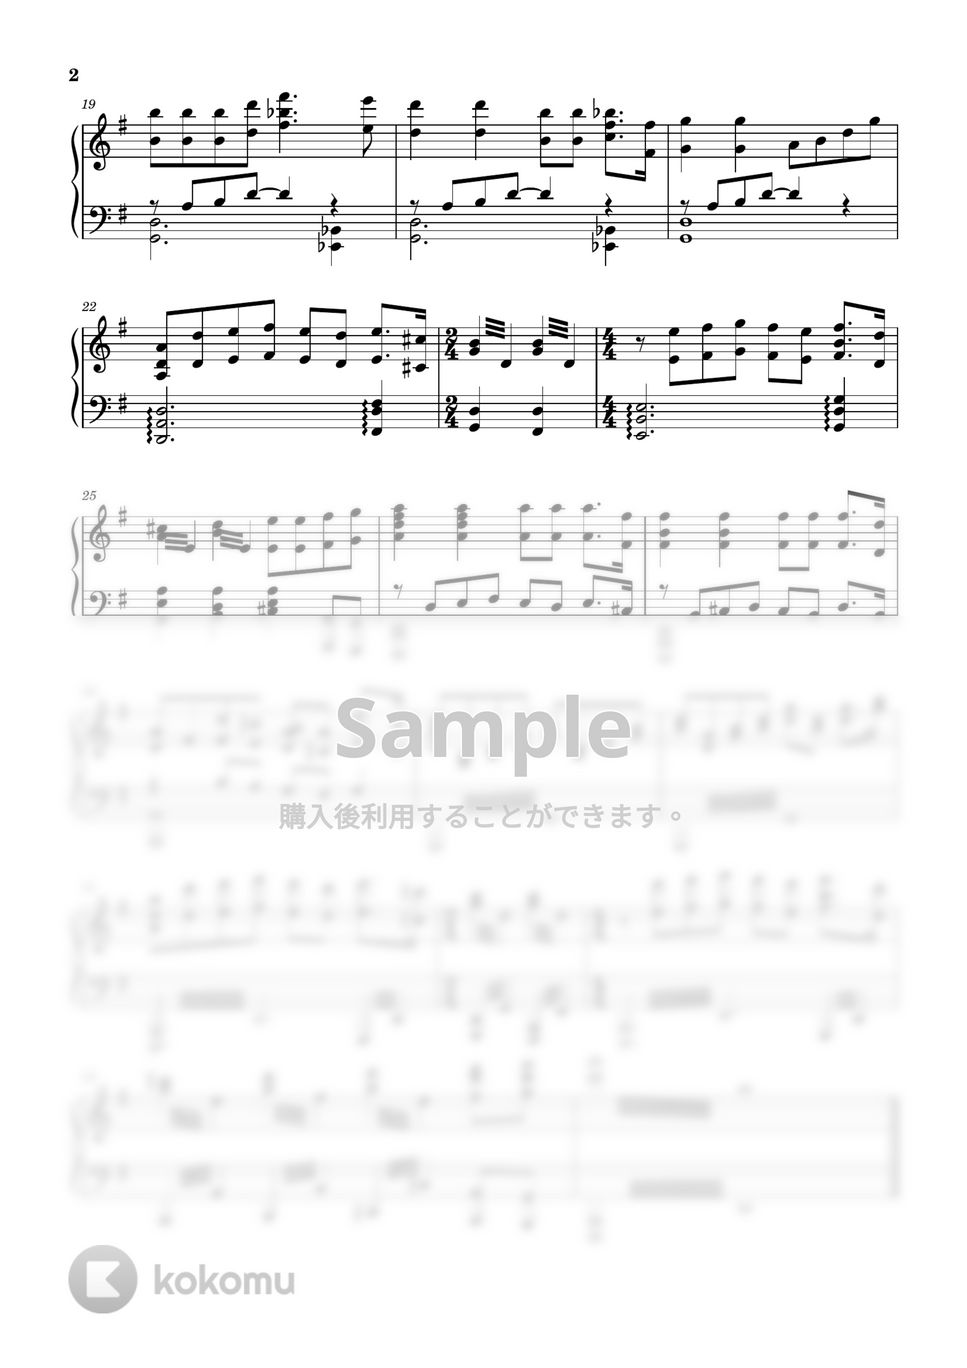 G.プッチーニ - 誰も寝てはならぬ (ピアノ上級ソロ) by pianon